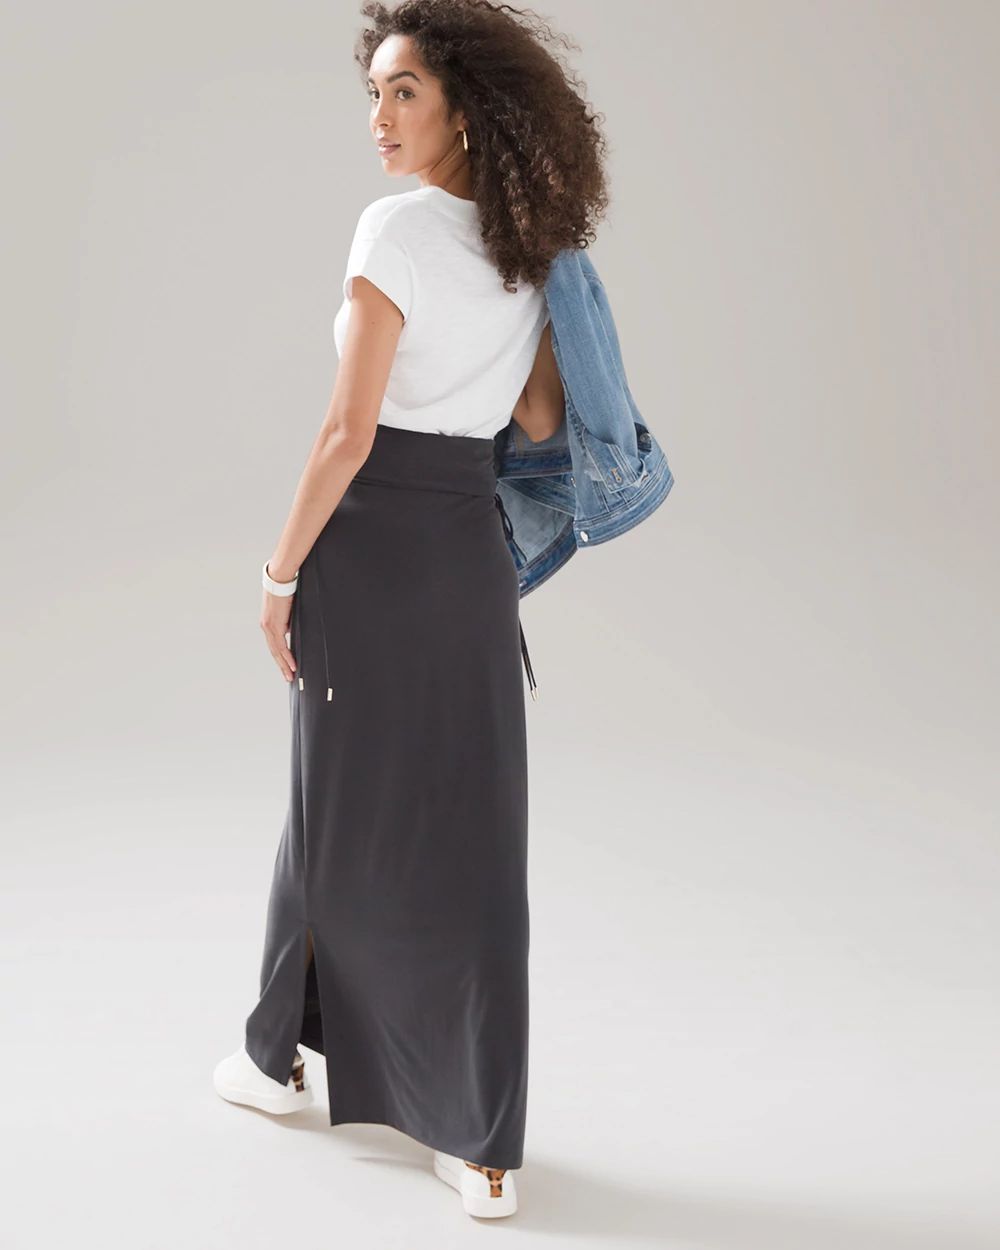 Convertible Maxi Skirt + Dress click to view larger image.